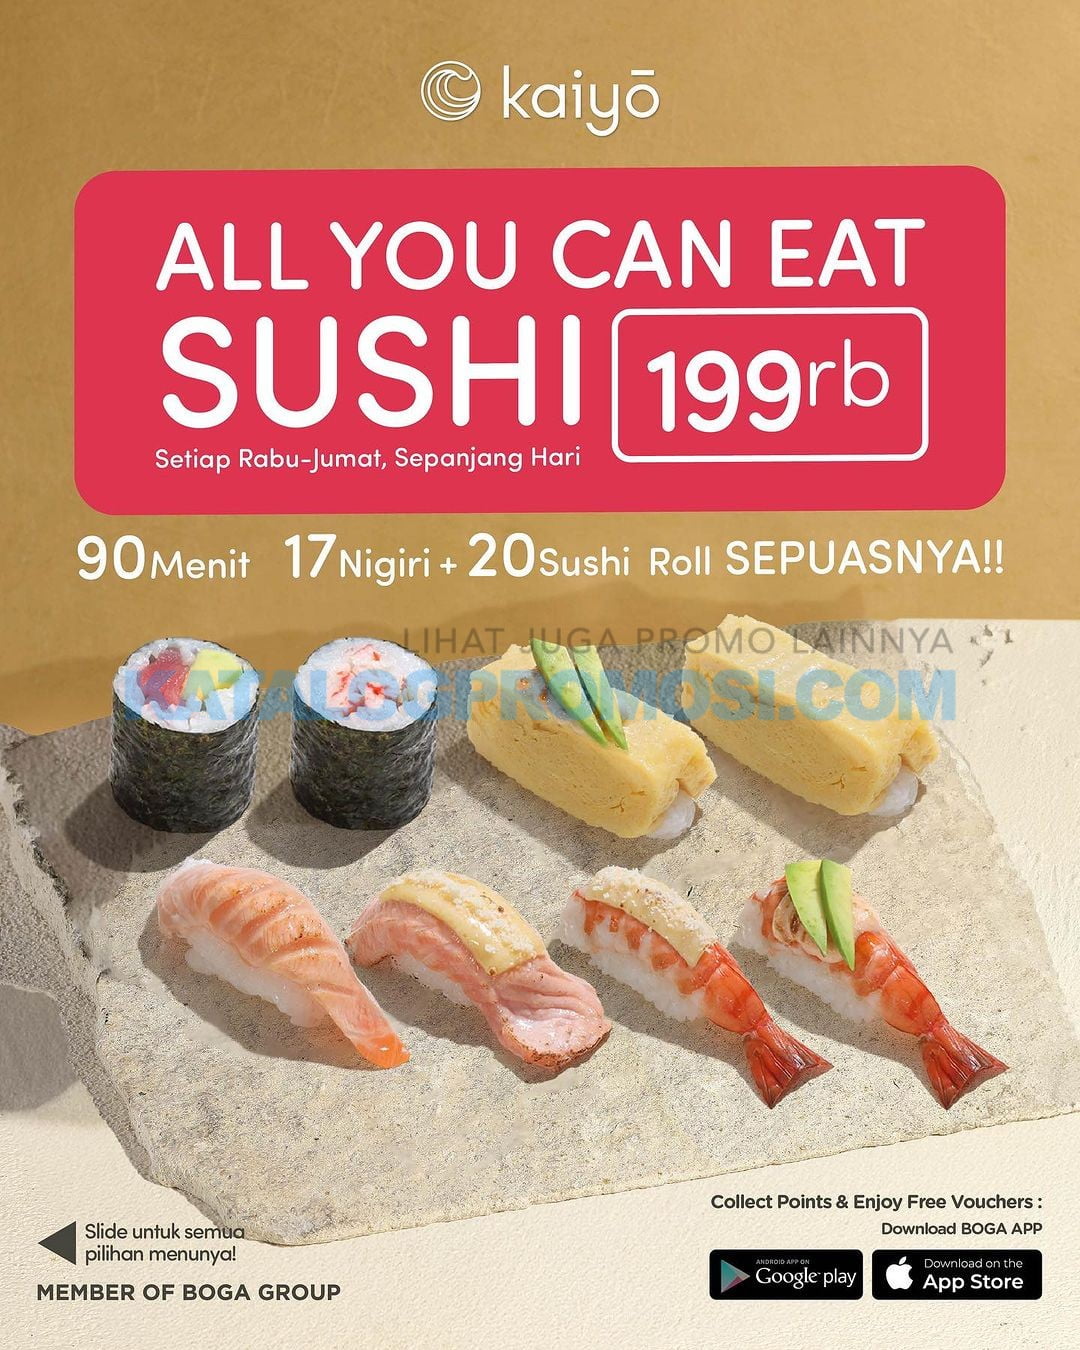 Promo Kaiyo ALL YOU CAN EAT SUSHI SEPUASNYA cuma Rp. 199.000